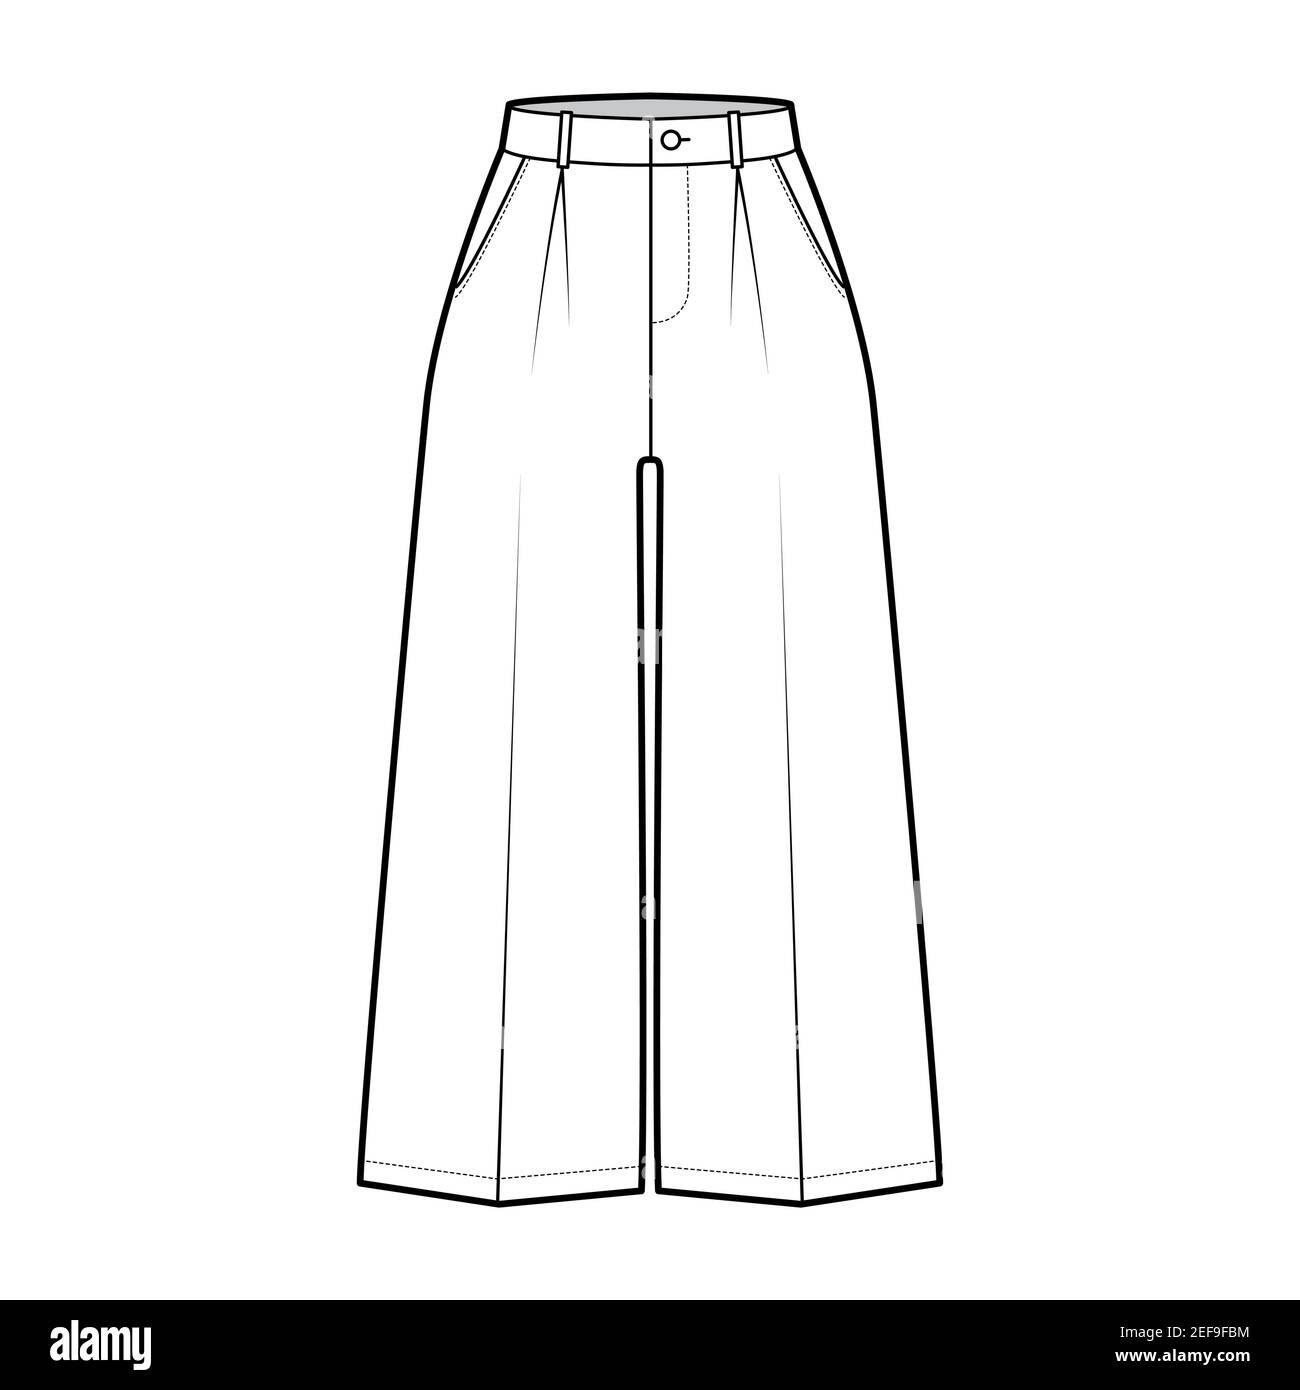 Pants capri technical fashion illustration with low waist, rise